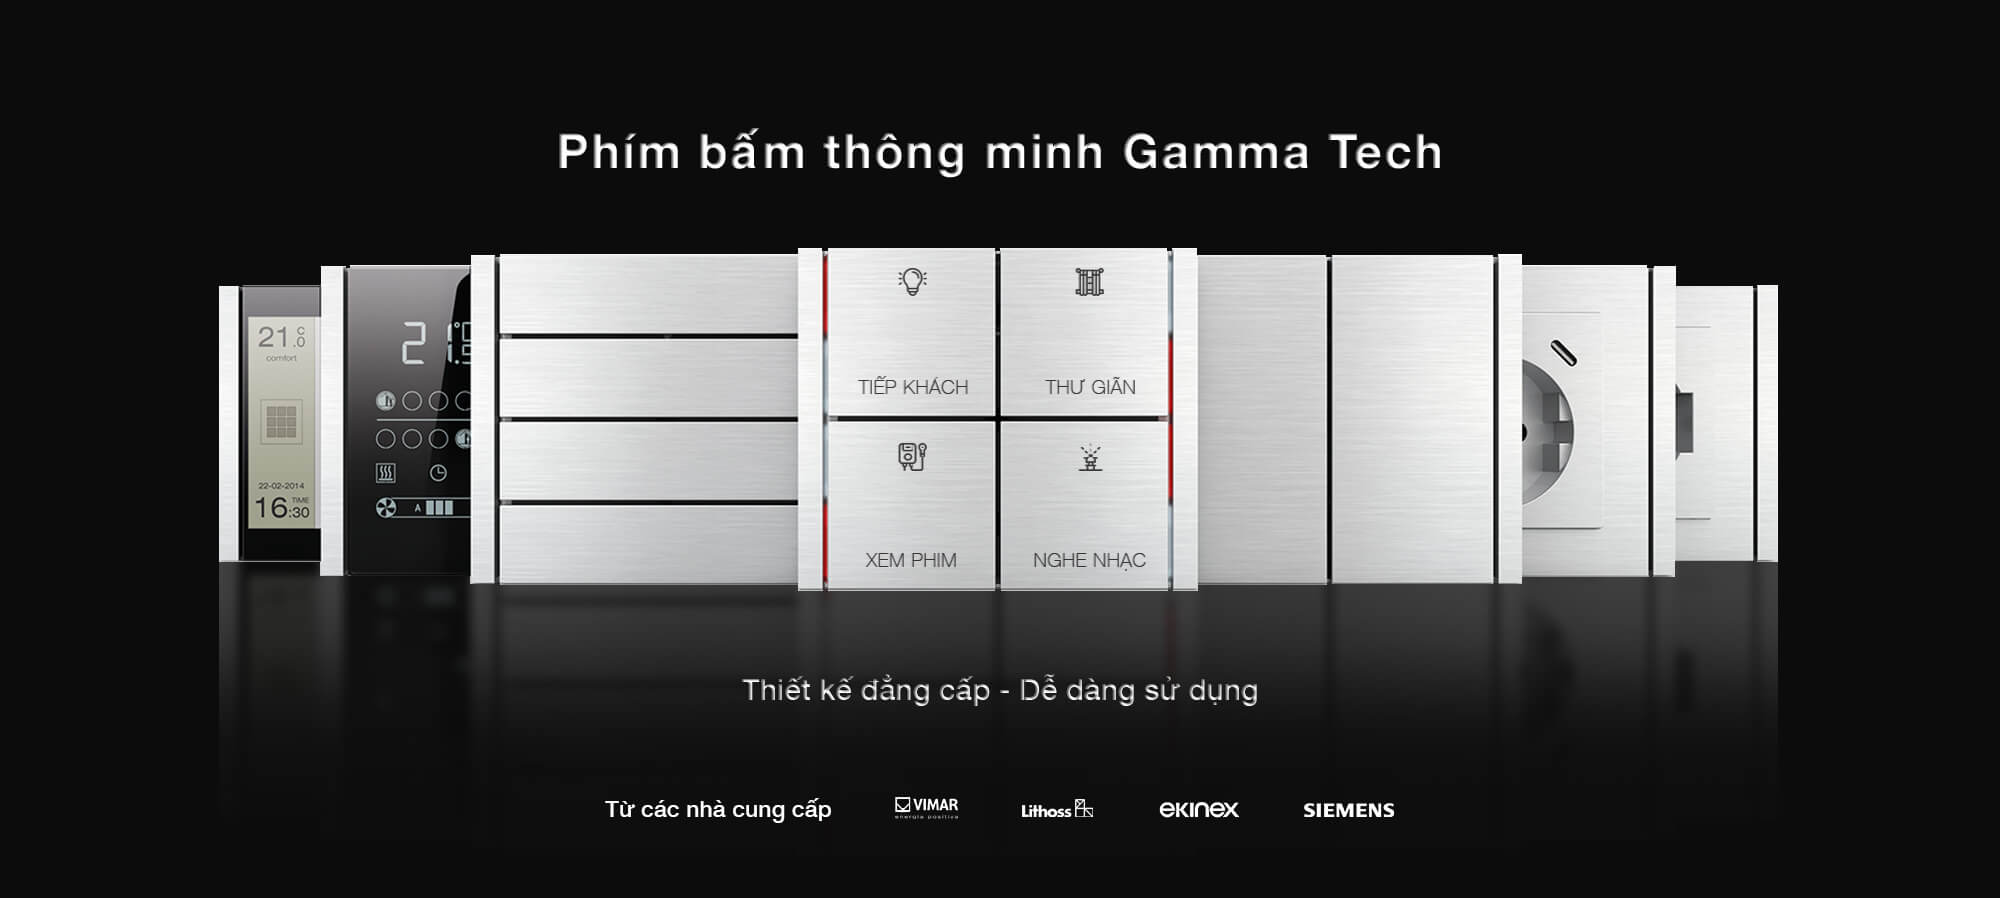 phim-bam-thong-minh-gamma-tech.jpg